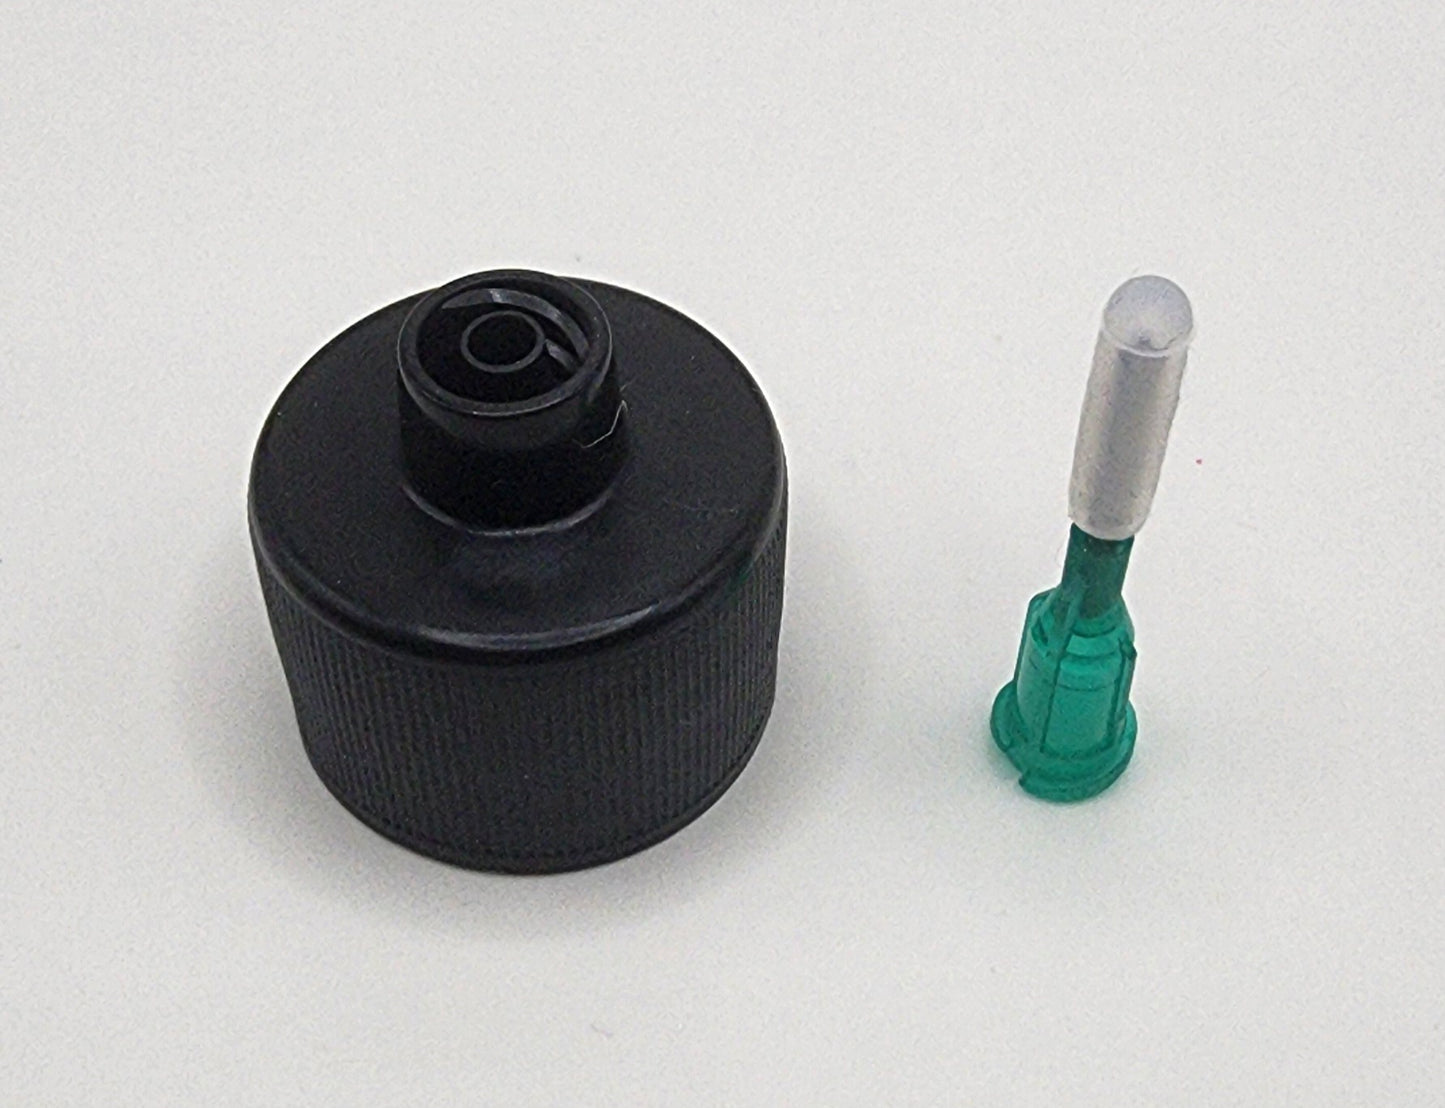 Blunt Needle Tip Paint Dispenser Kit